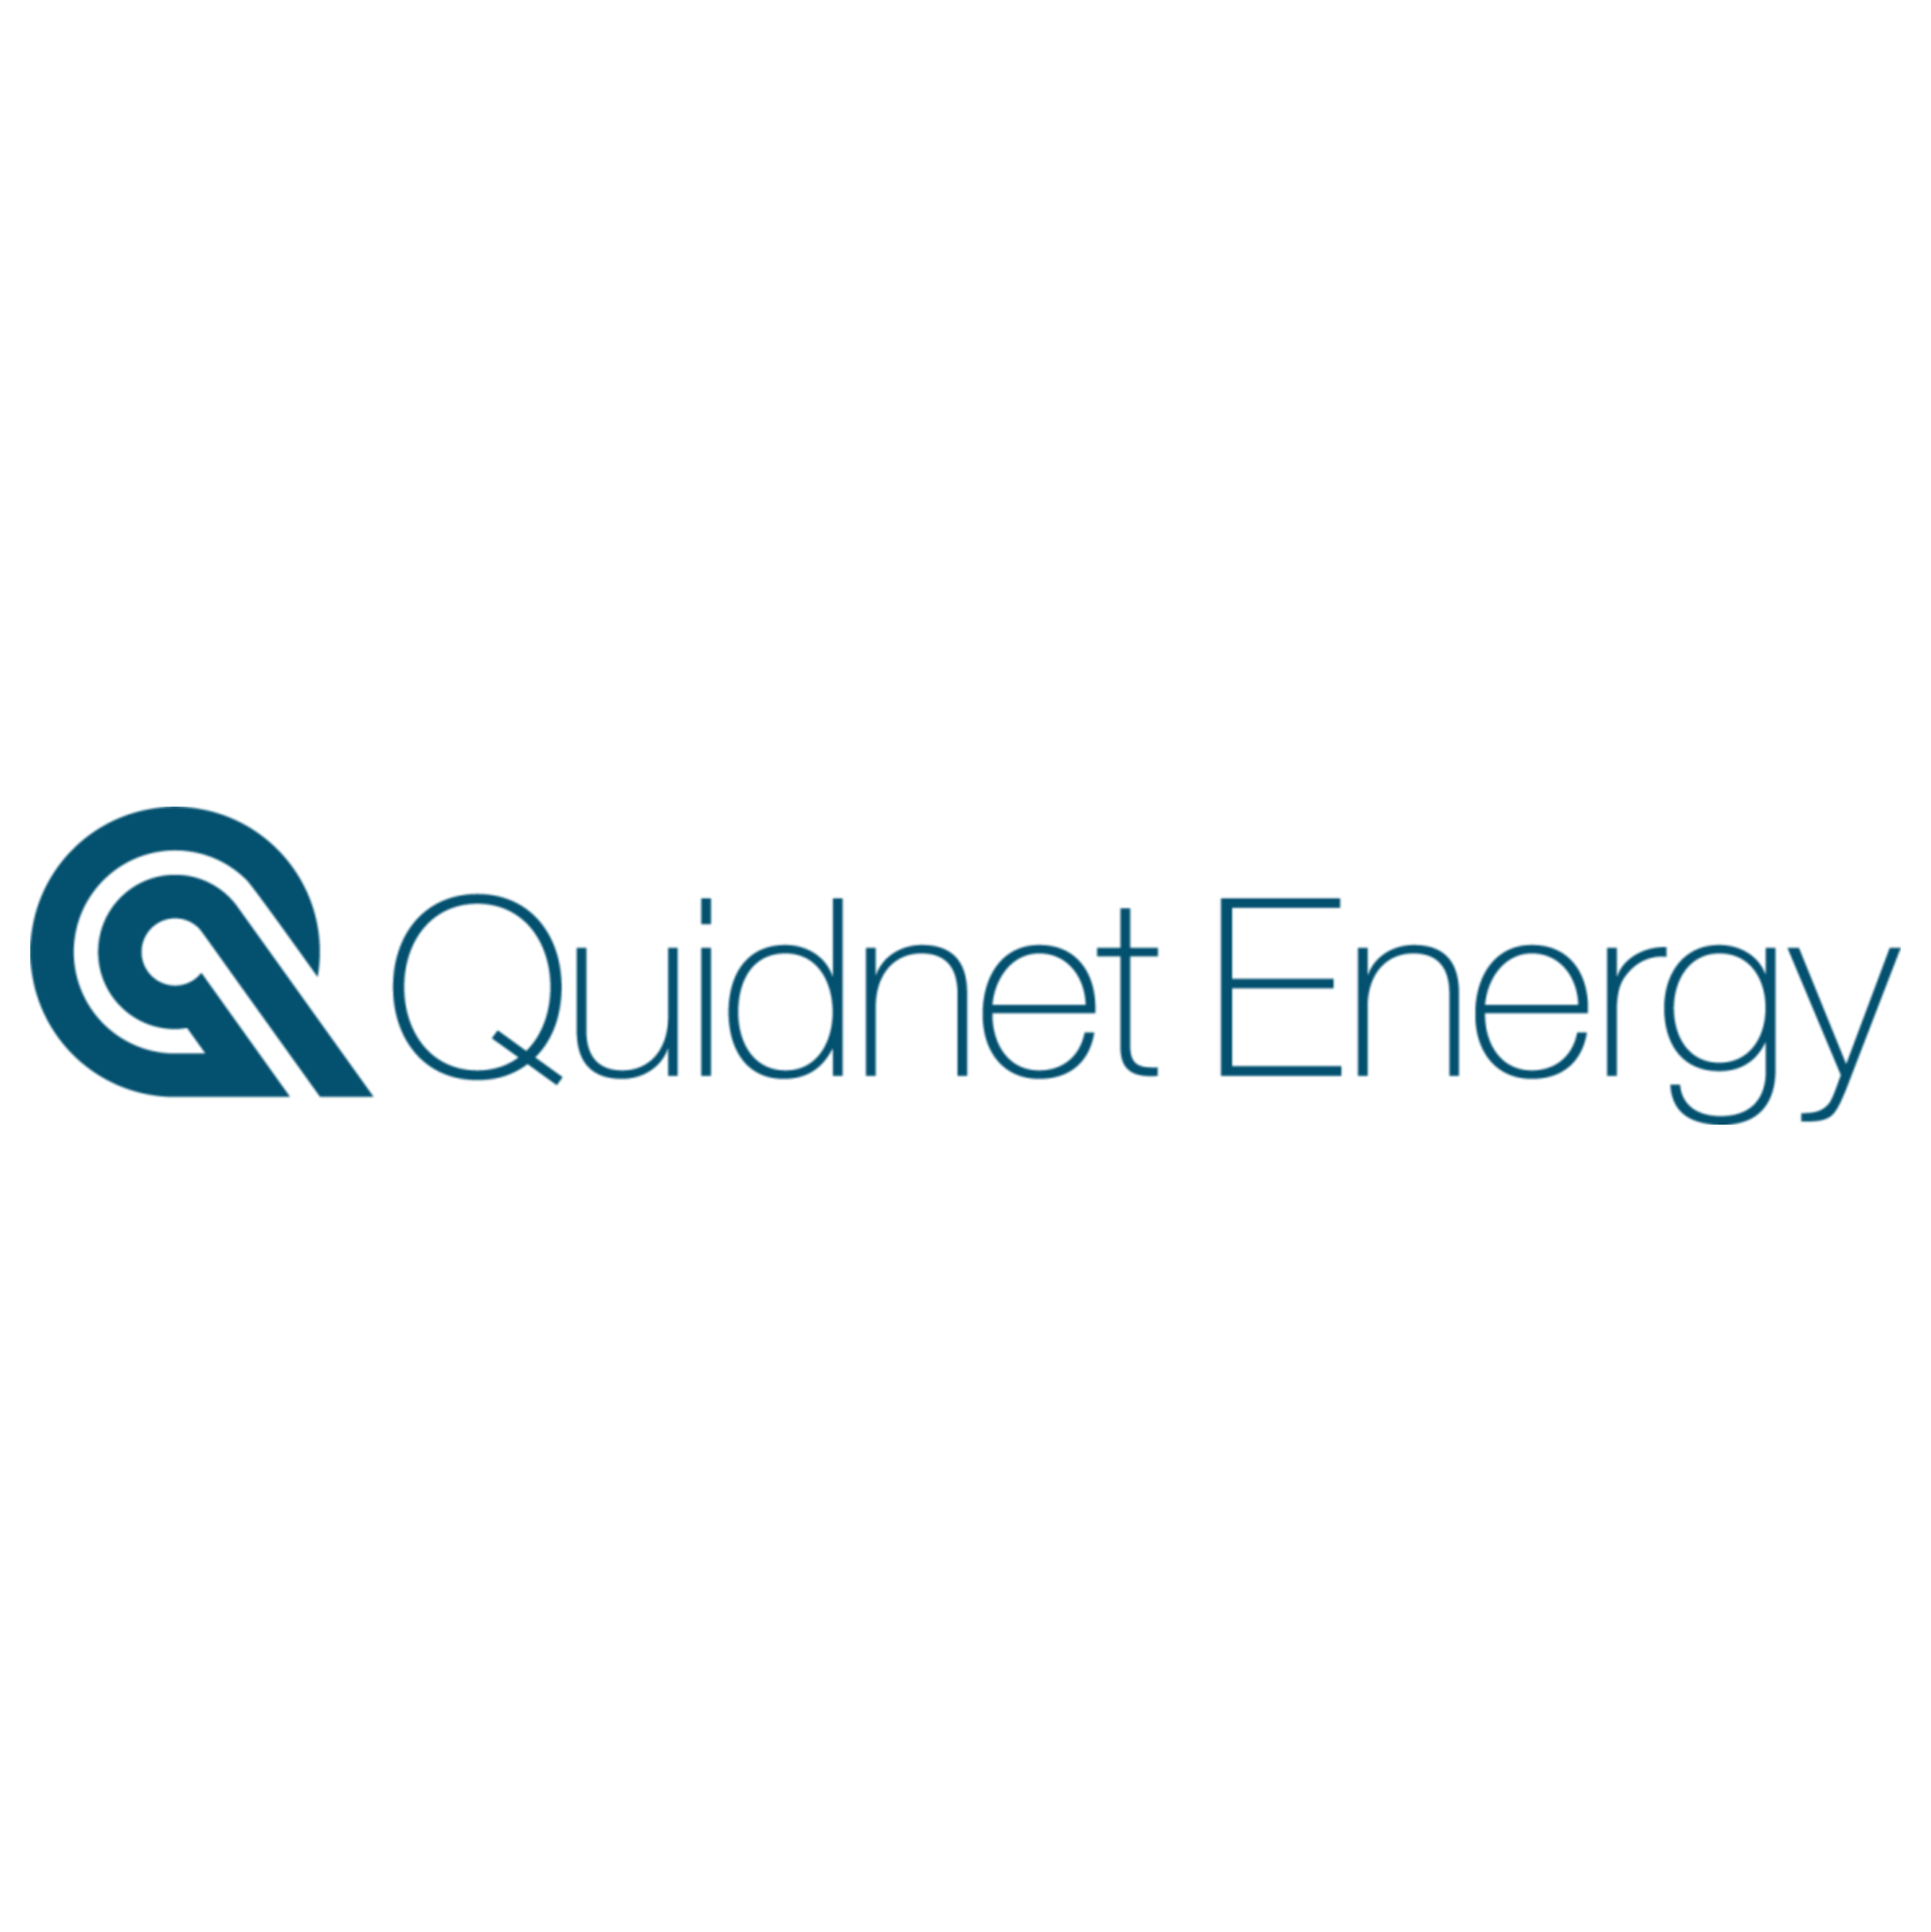 Quidnet Energy logo